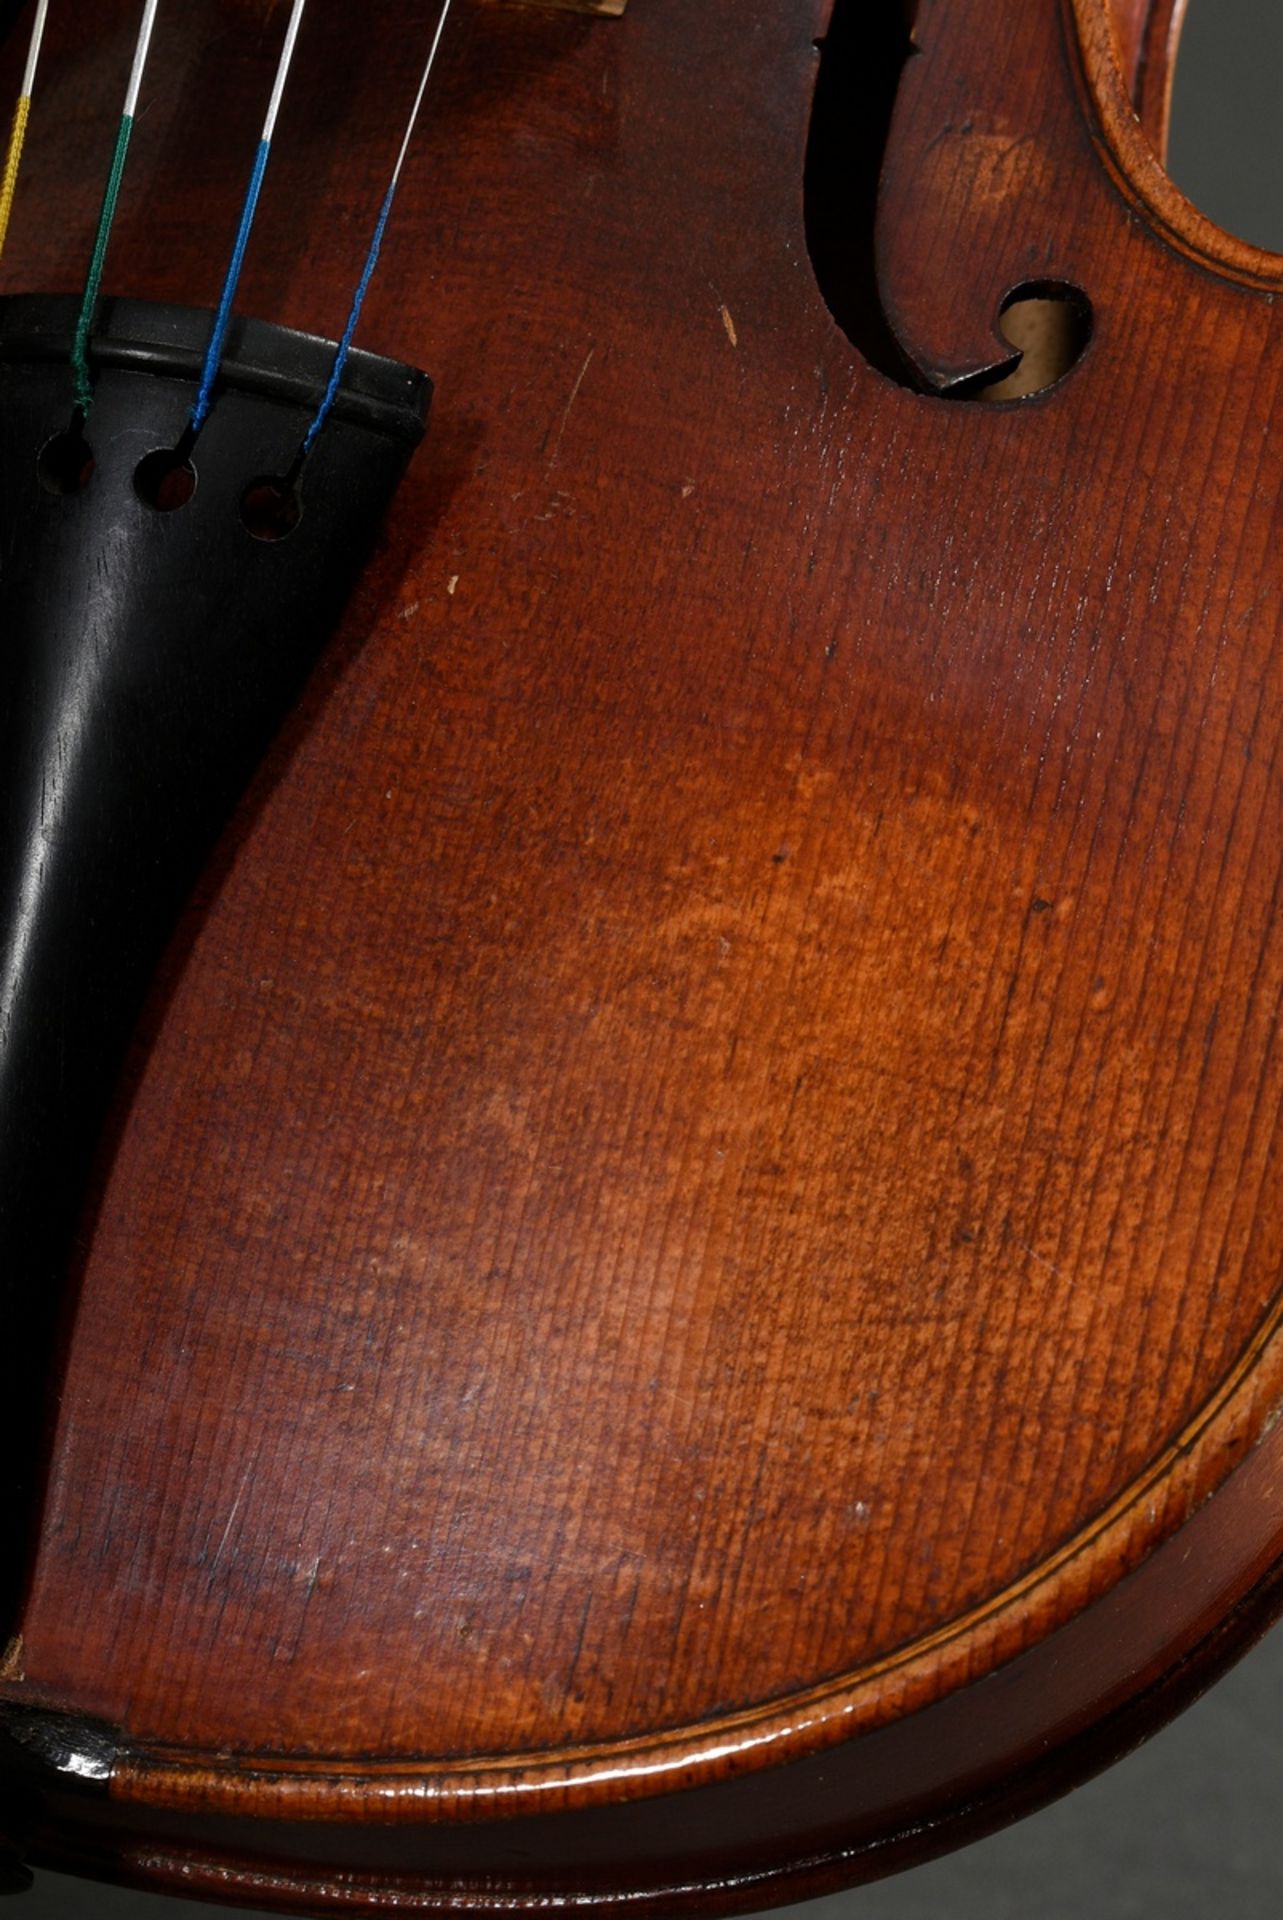 Saxon violin, facsimile label "Schuster & Co. Markneukirchen in Saxony 1925", split back, sound pos - Image 11 of 16